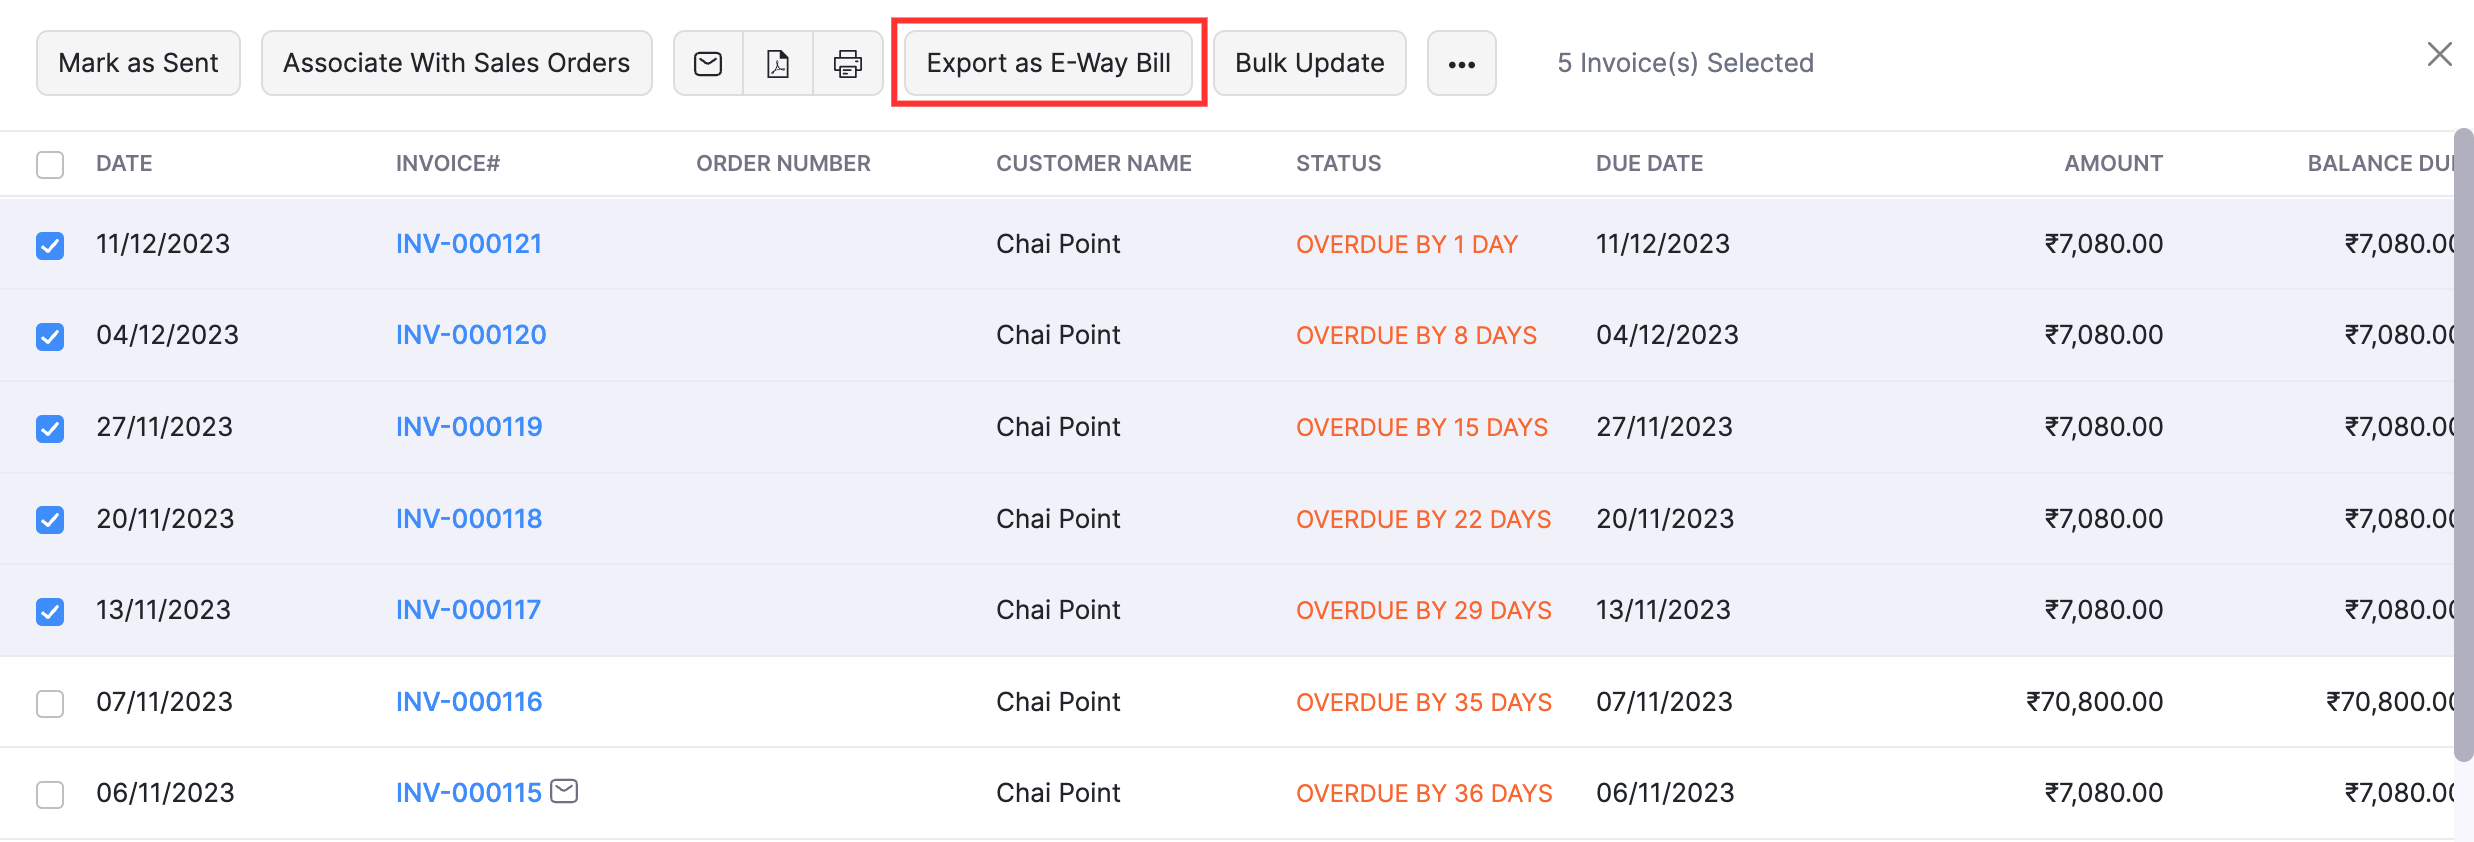 Click Export as E-Way Bill at the top